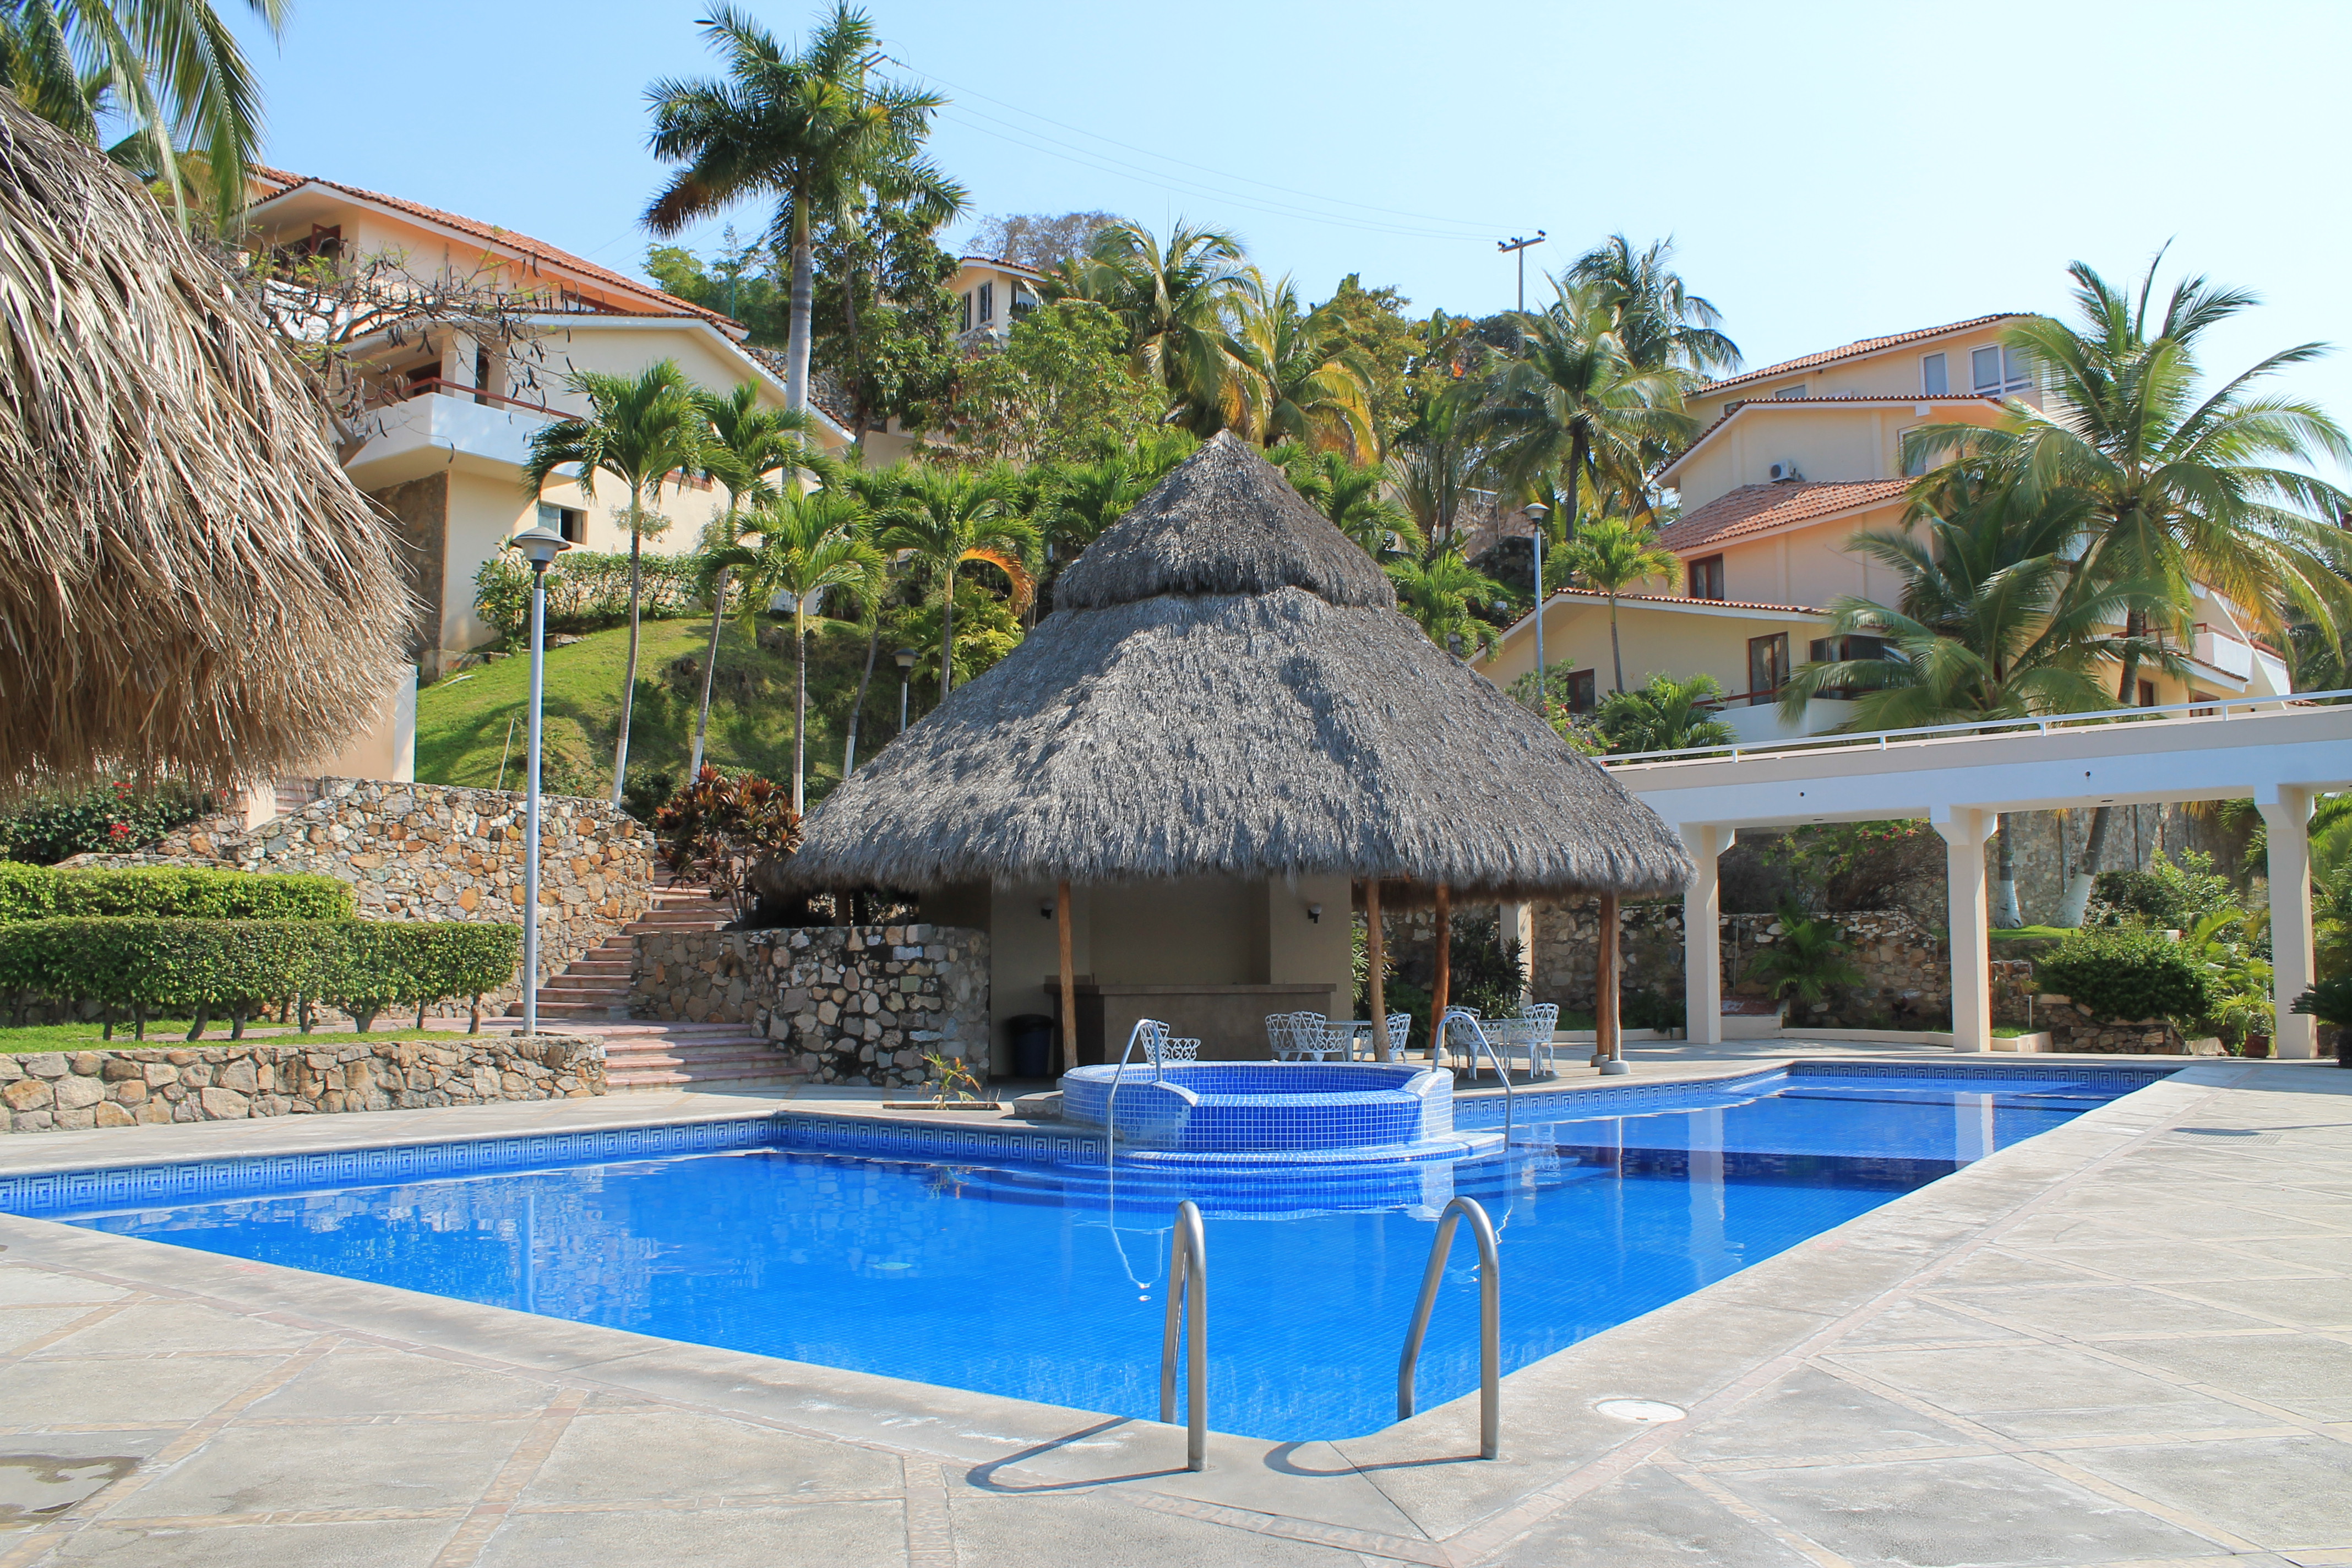 Villas del Palmar Manzanillo with Beach Club, Manzanillo @IDR 1484862 -  Villas del Palmar Manzanillo with Beach Club Price, Address & Reviews